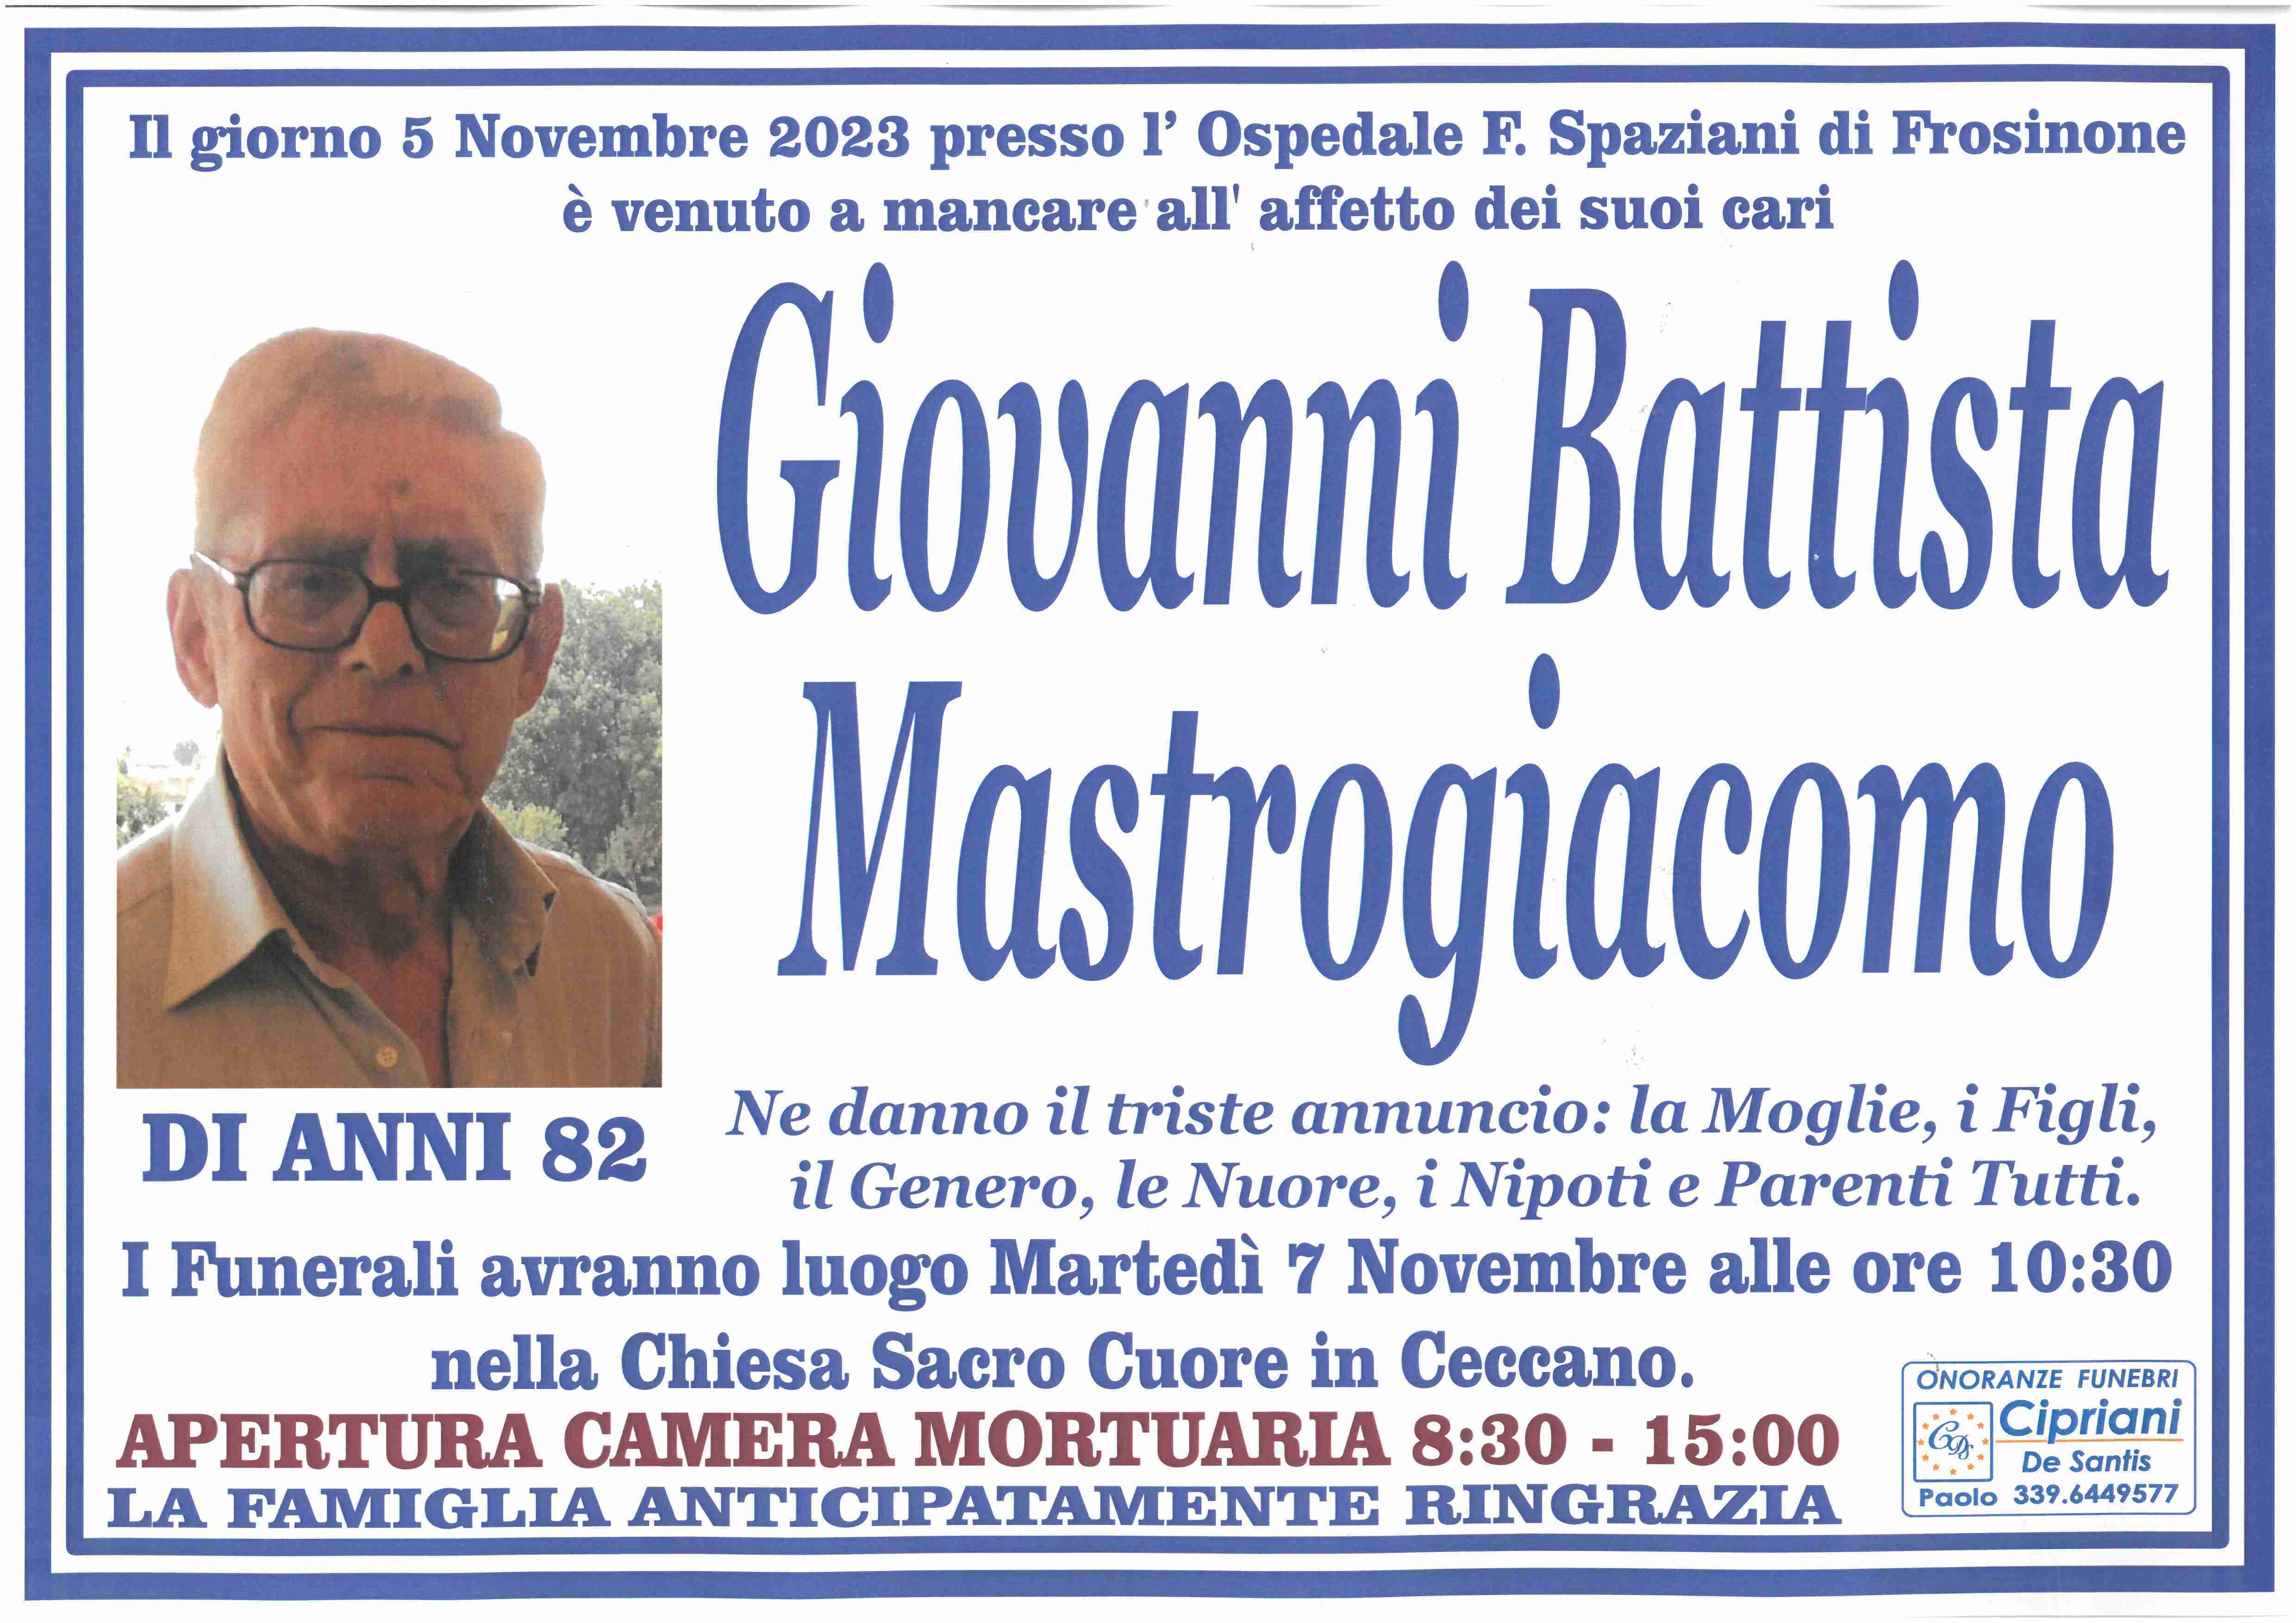 Giovanni Battista Mastrogiacomo